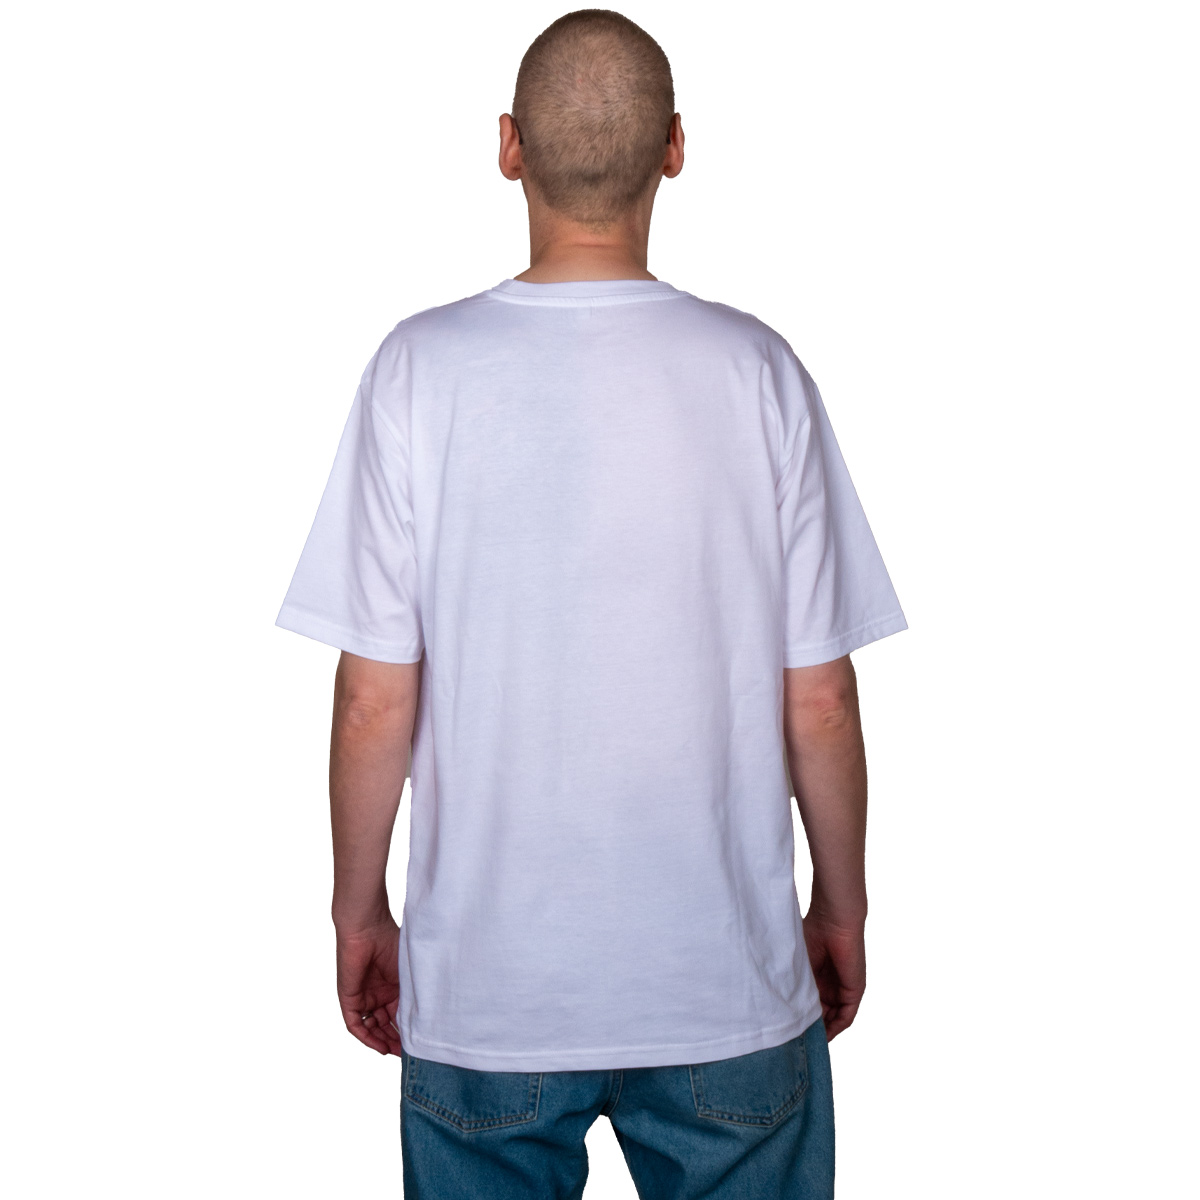 Feedmysoul T-Shirt Colour Emb (white)